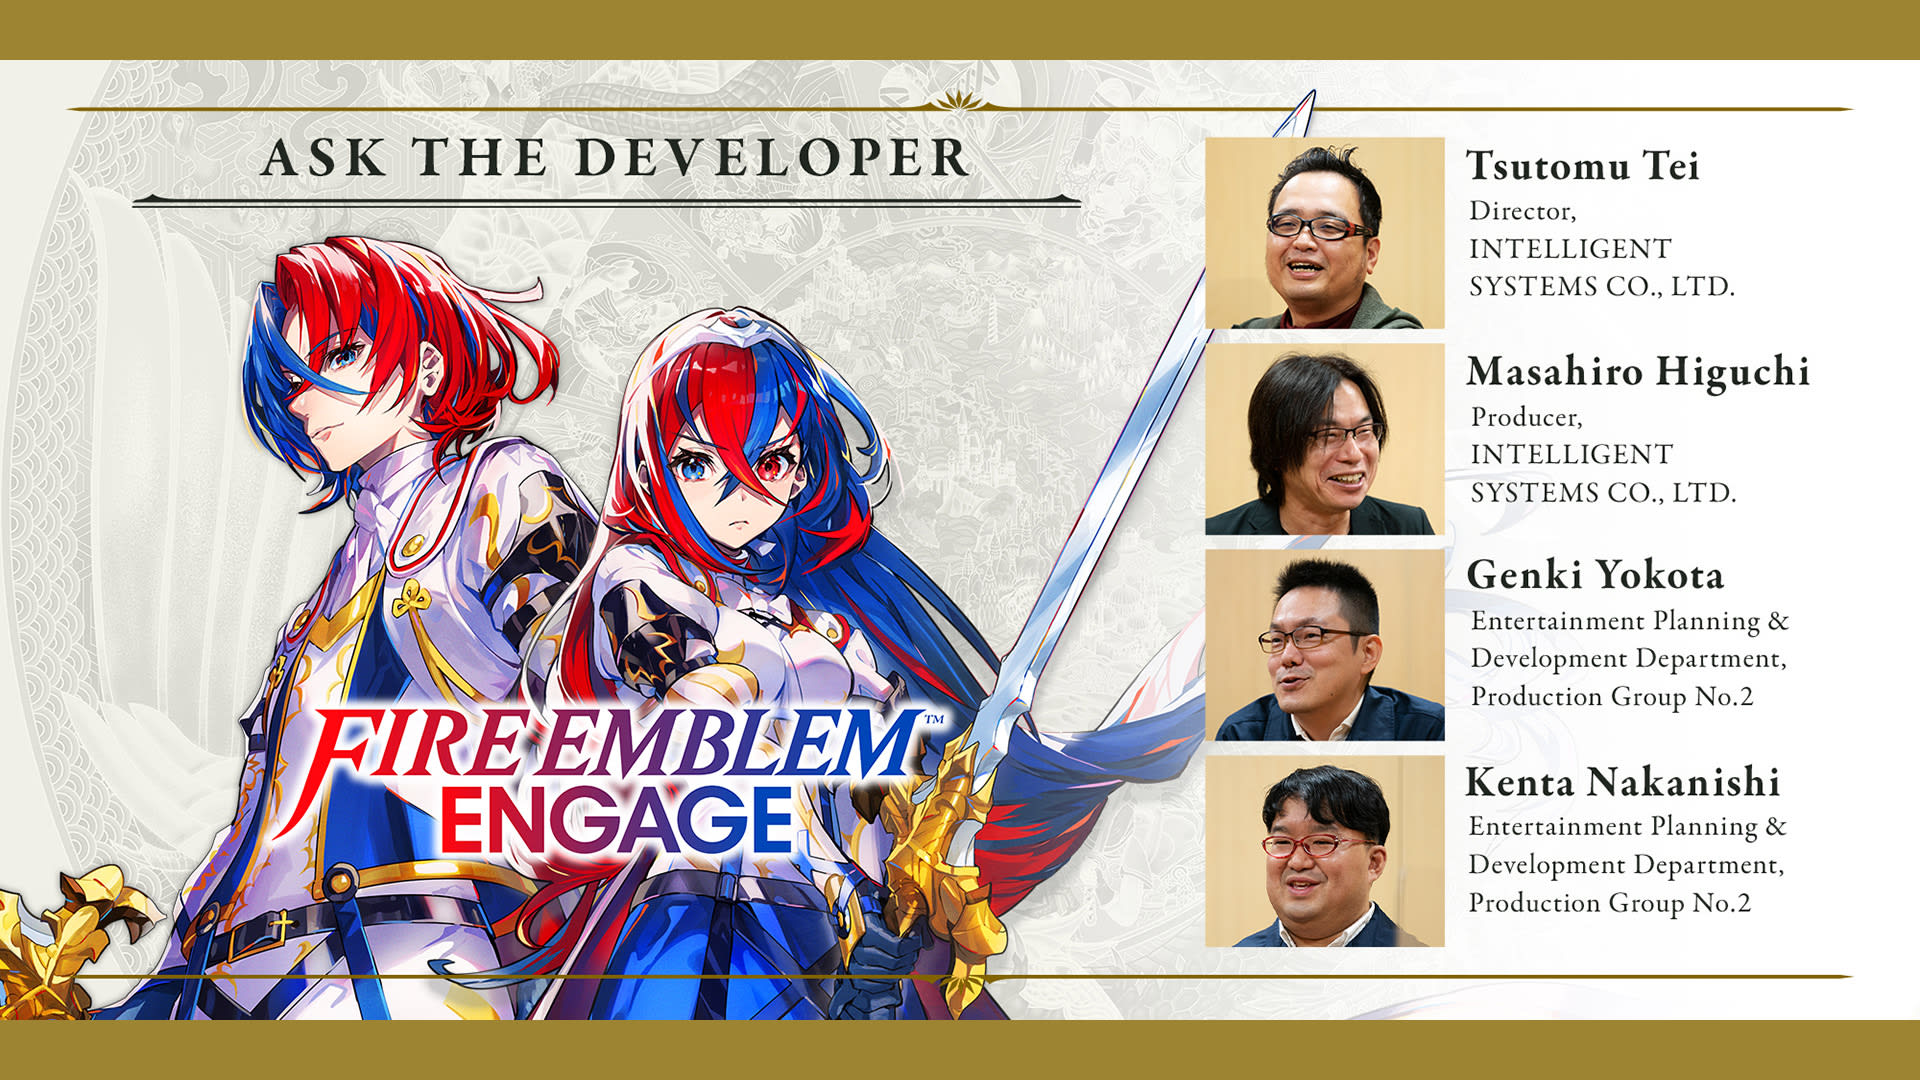 ask-the-developer-vol-8-fire-emblem-engage-chapter-3-nintendo